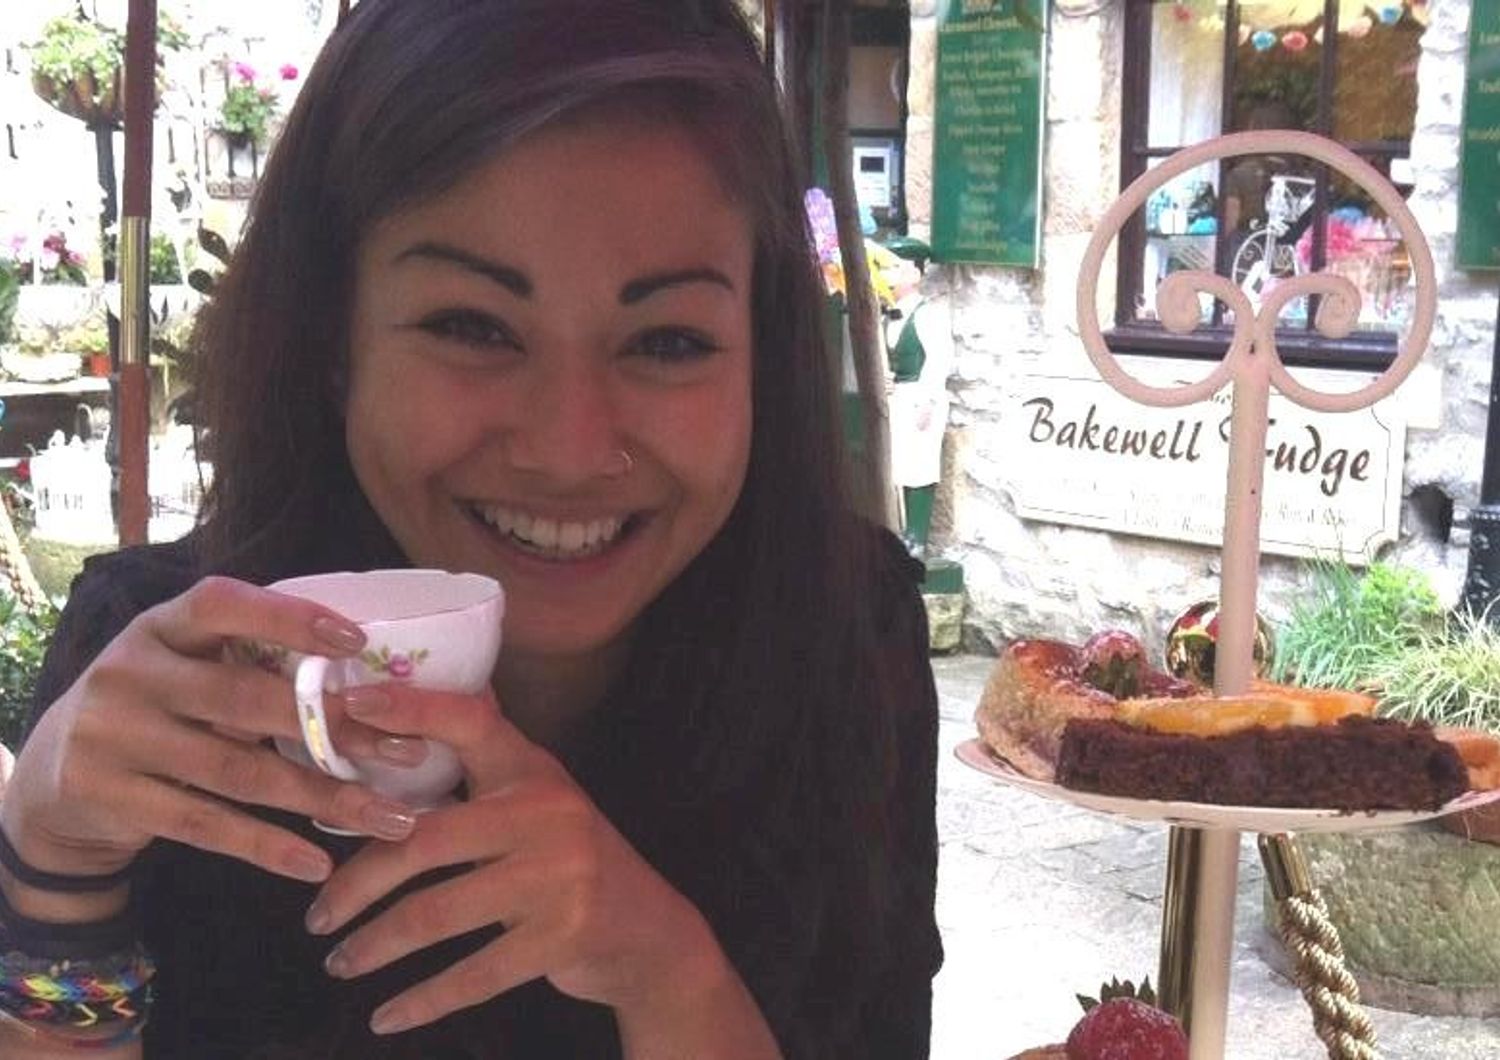 Mia Ayliffe-Chung ragazza inglese uccisa da terrorista isis in australia&nbsp;